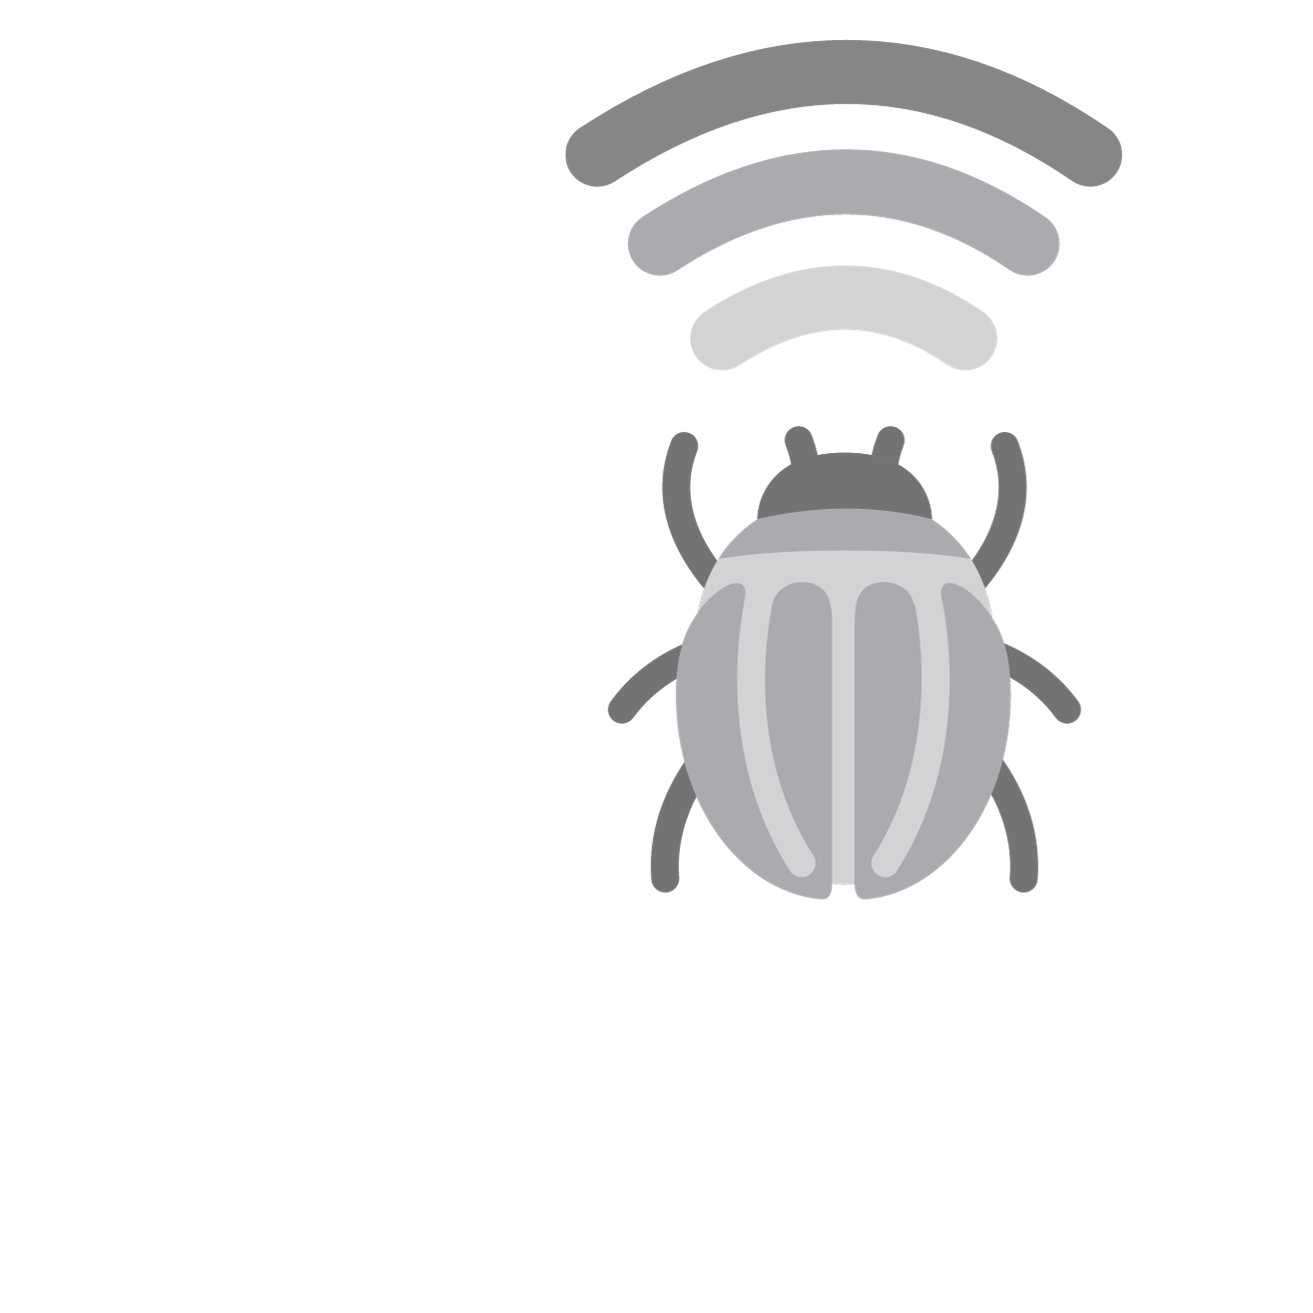 907 Beetle Logo